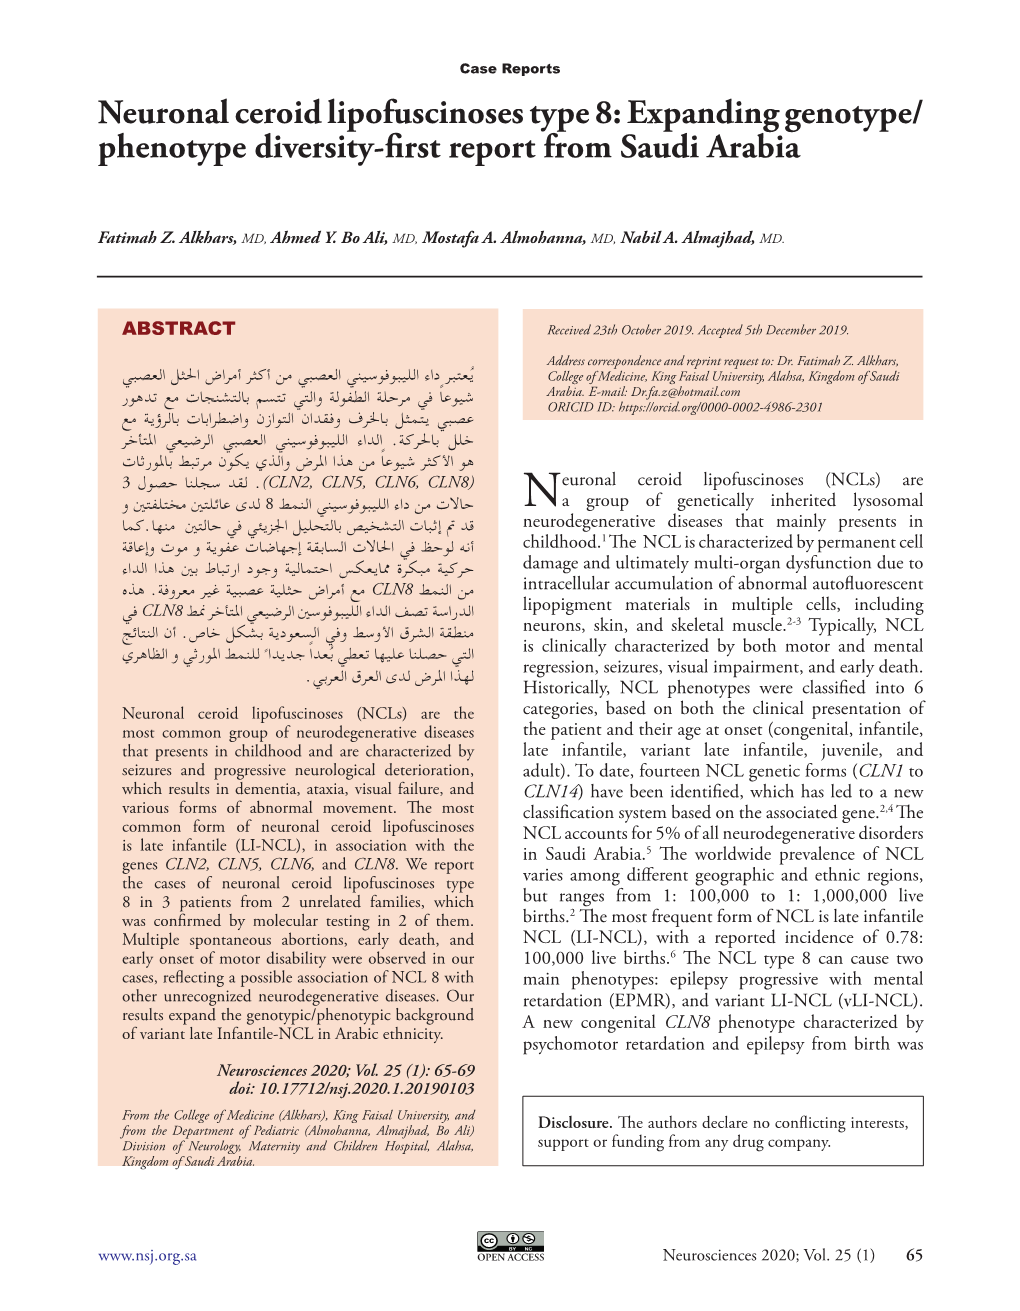 Neuronal Ceroid Lipofuscinoses Type 8: Expanding Genotype/ Phenotype Diversity-First Report from Saudi Arabia